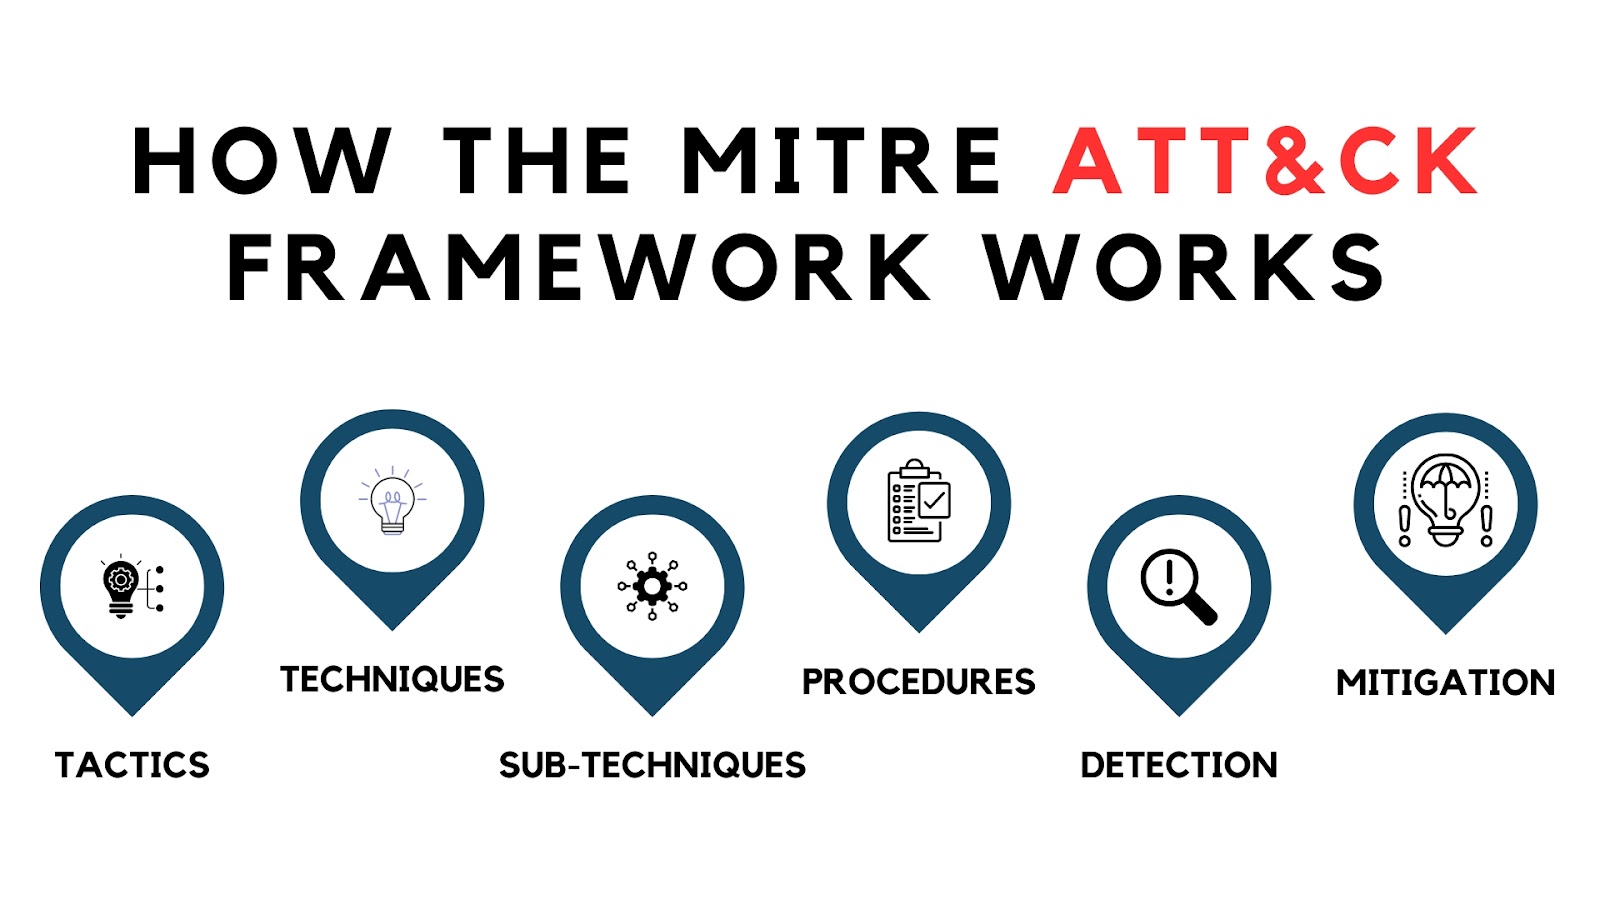 How The MITRE ATT&CK Framework Works